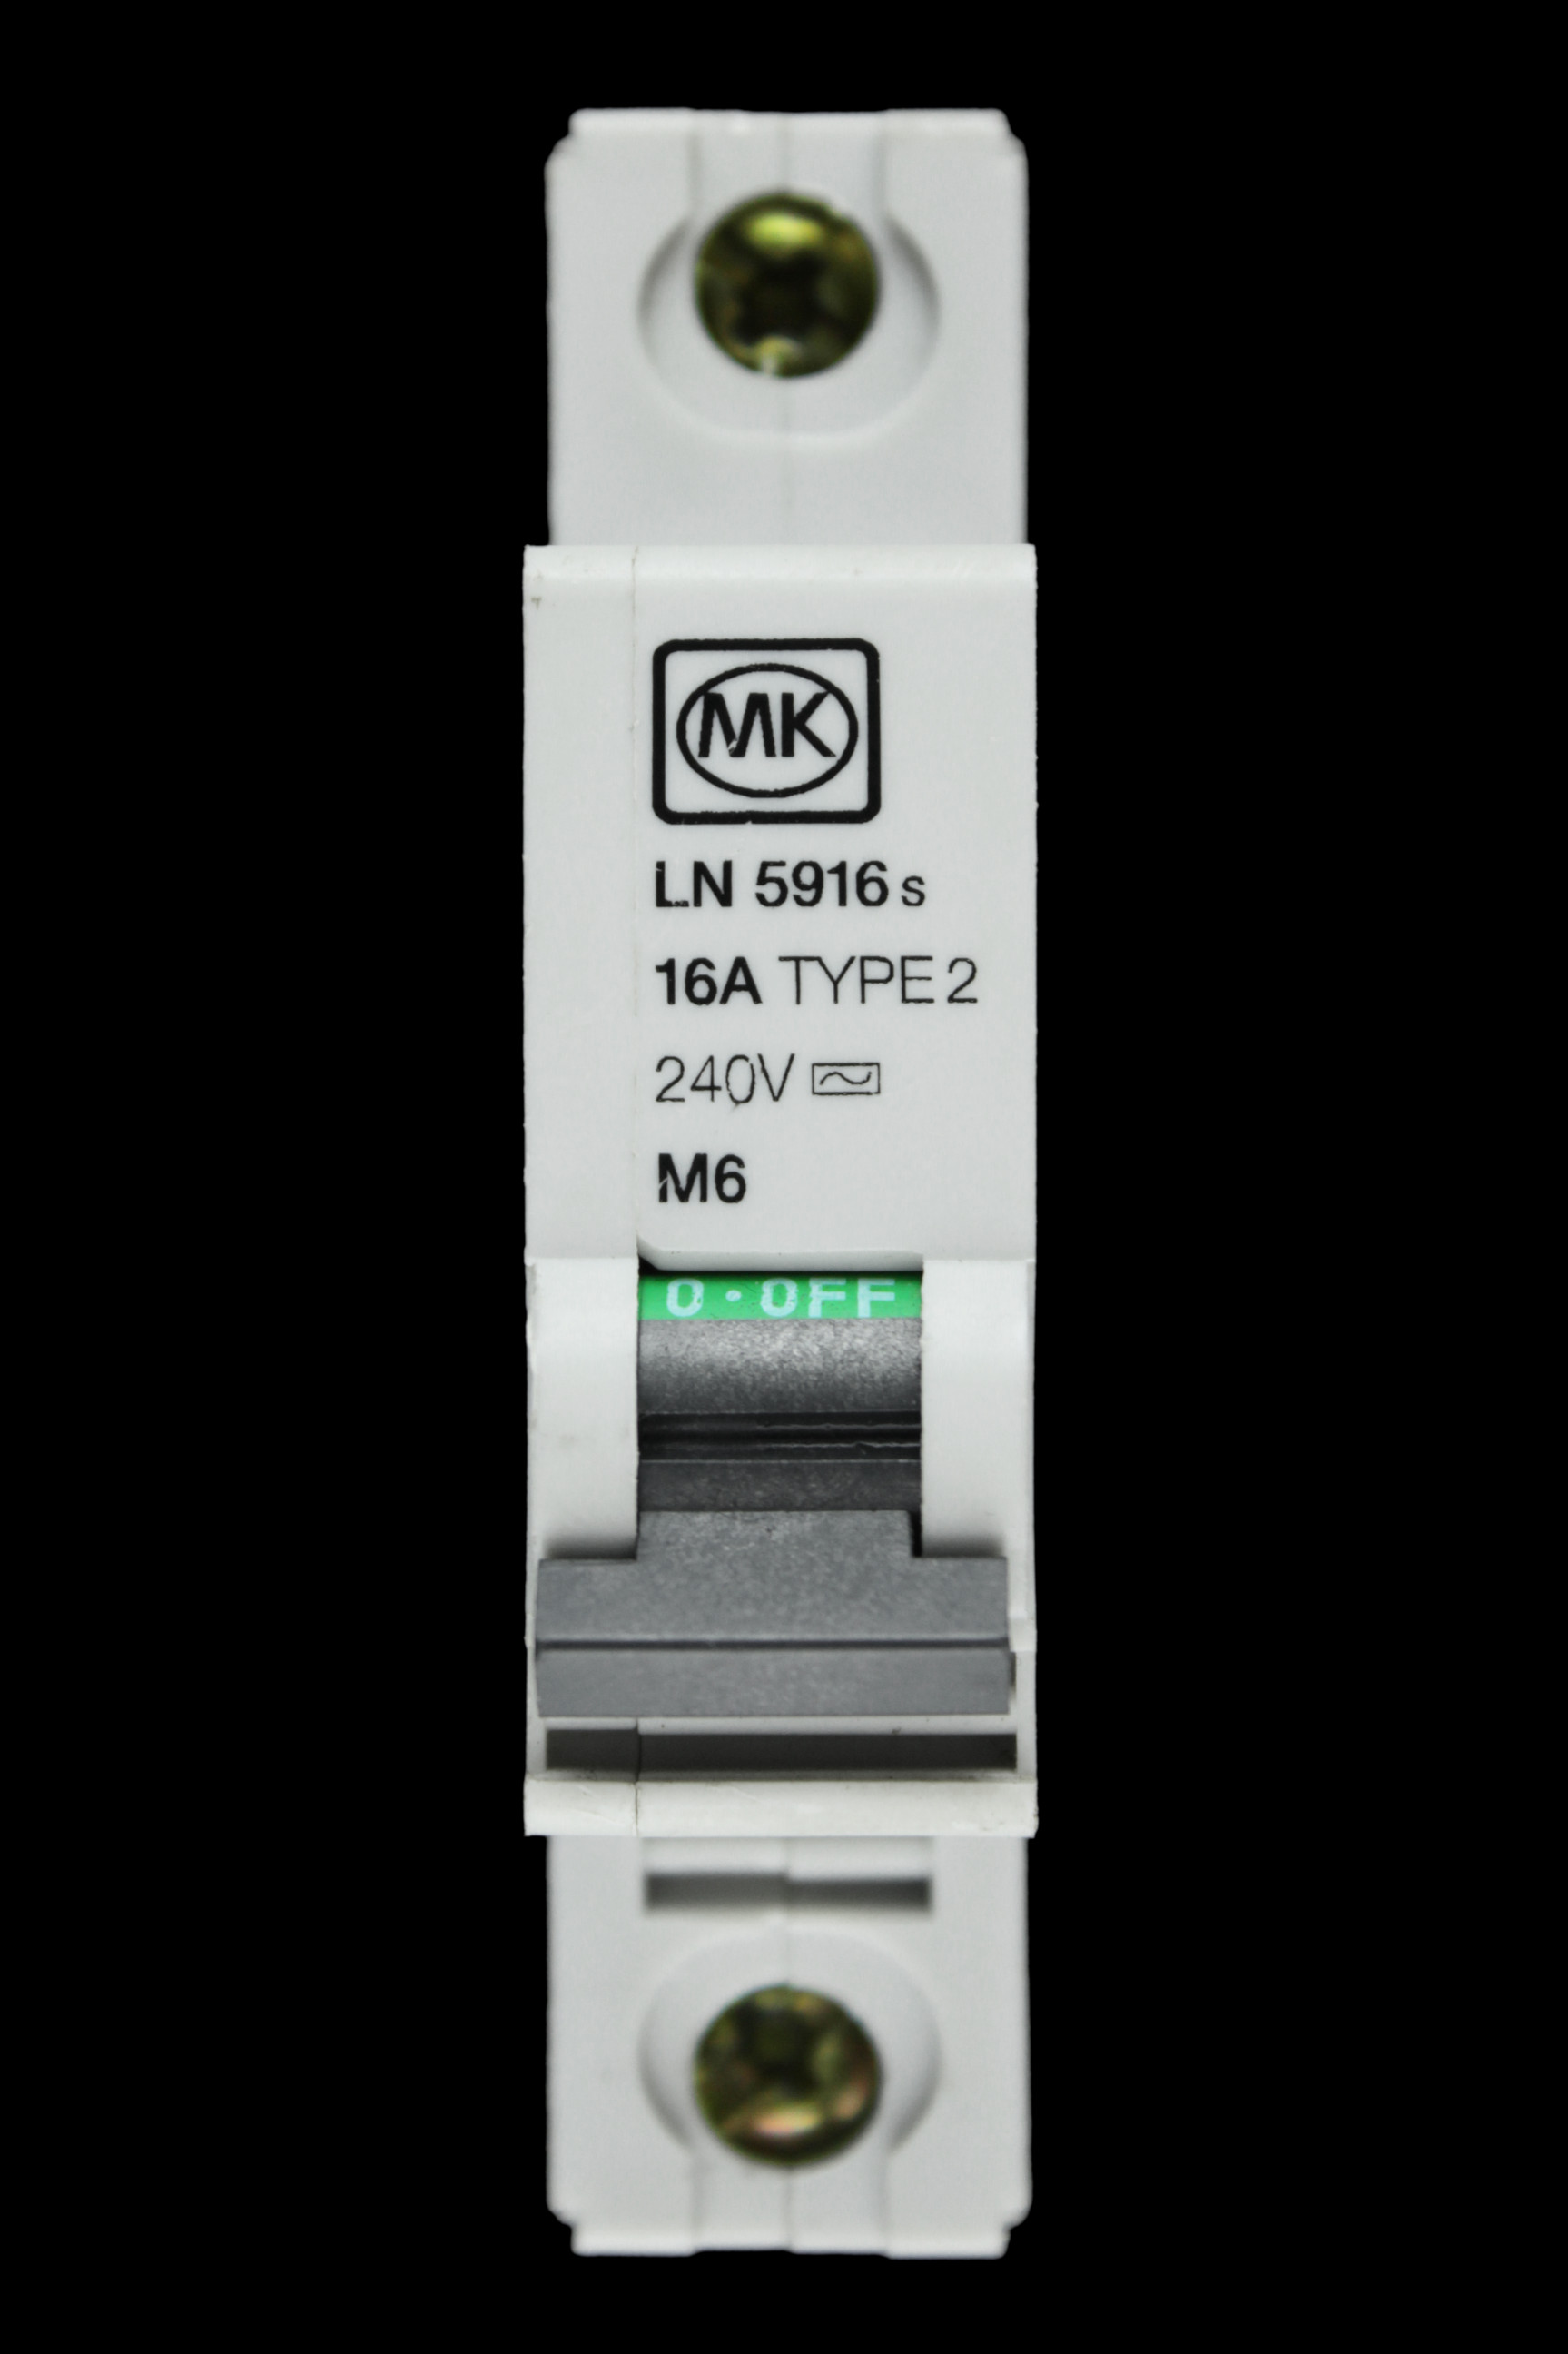 MK 16 AMP TYPE 2 M6 MCB CIRCUIT BREAKER LN 5916s SENTRY